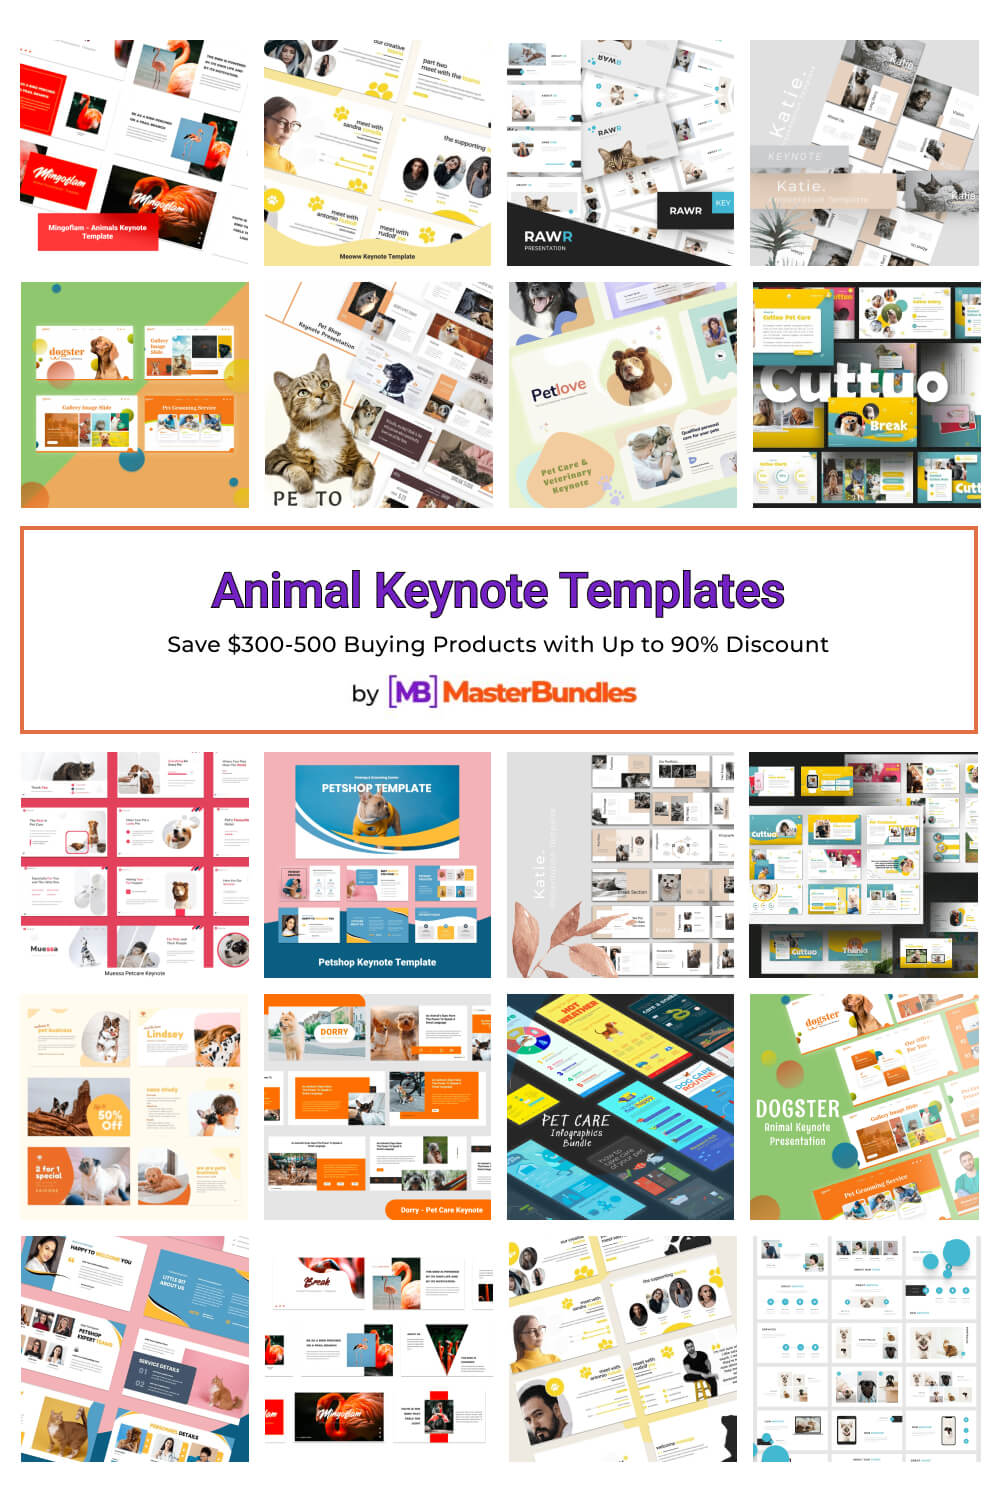 animal keynote templates pinterest image.